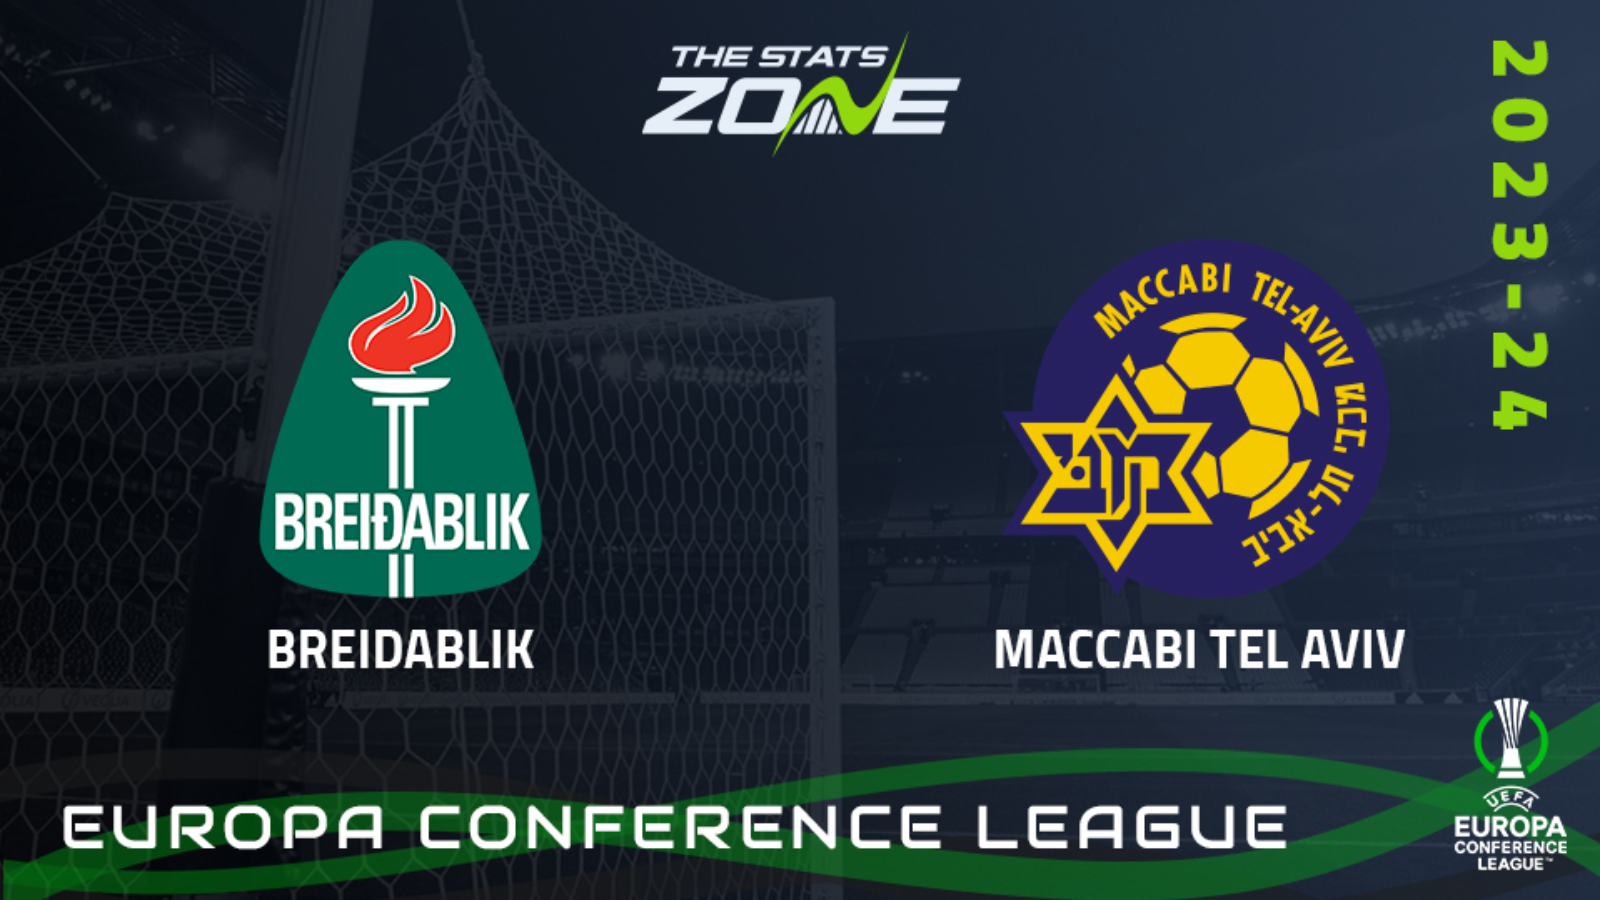 2023/24 League fixtures announced - Maccabi Tel Aviv Football Club